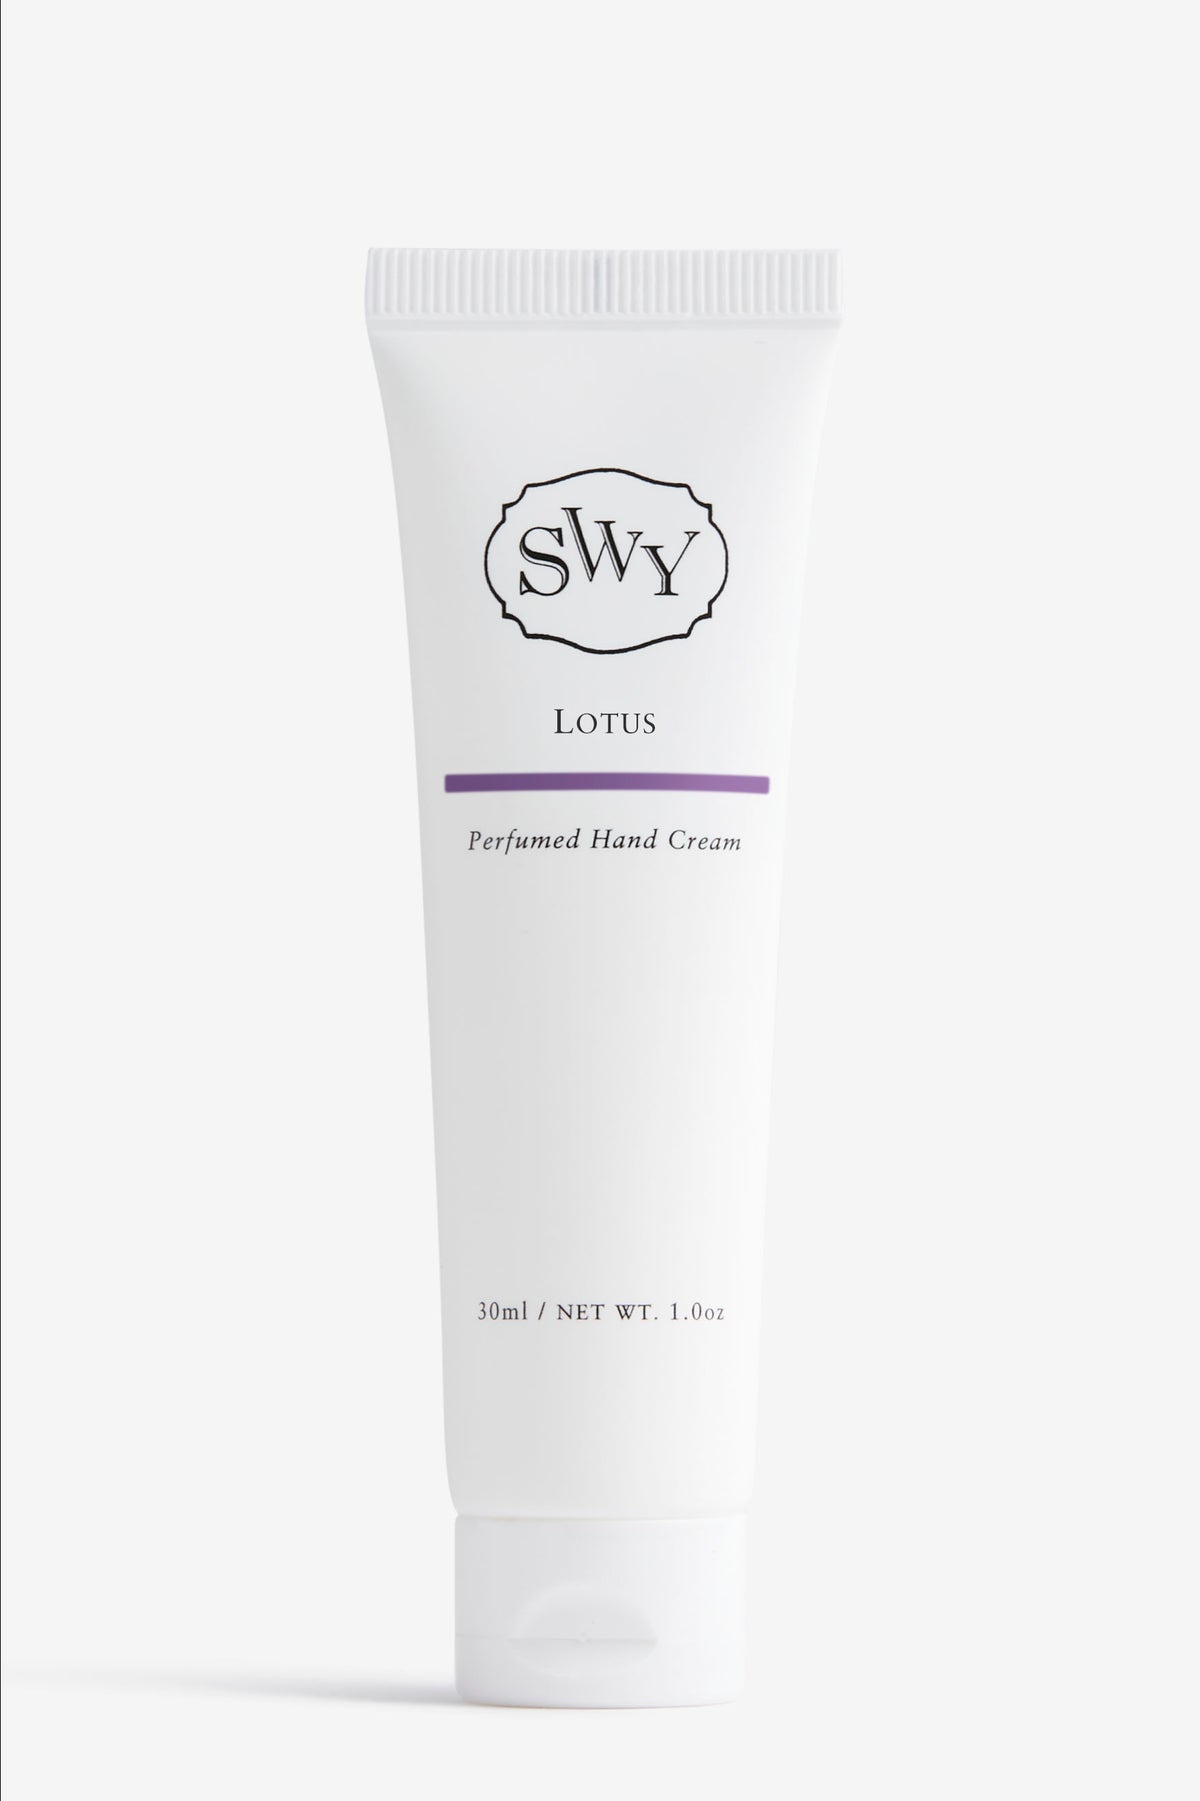 Hand Cream - pocket size - Lotus